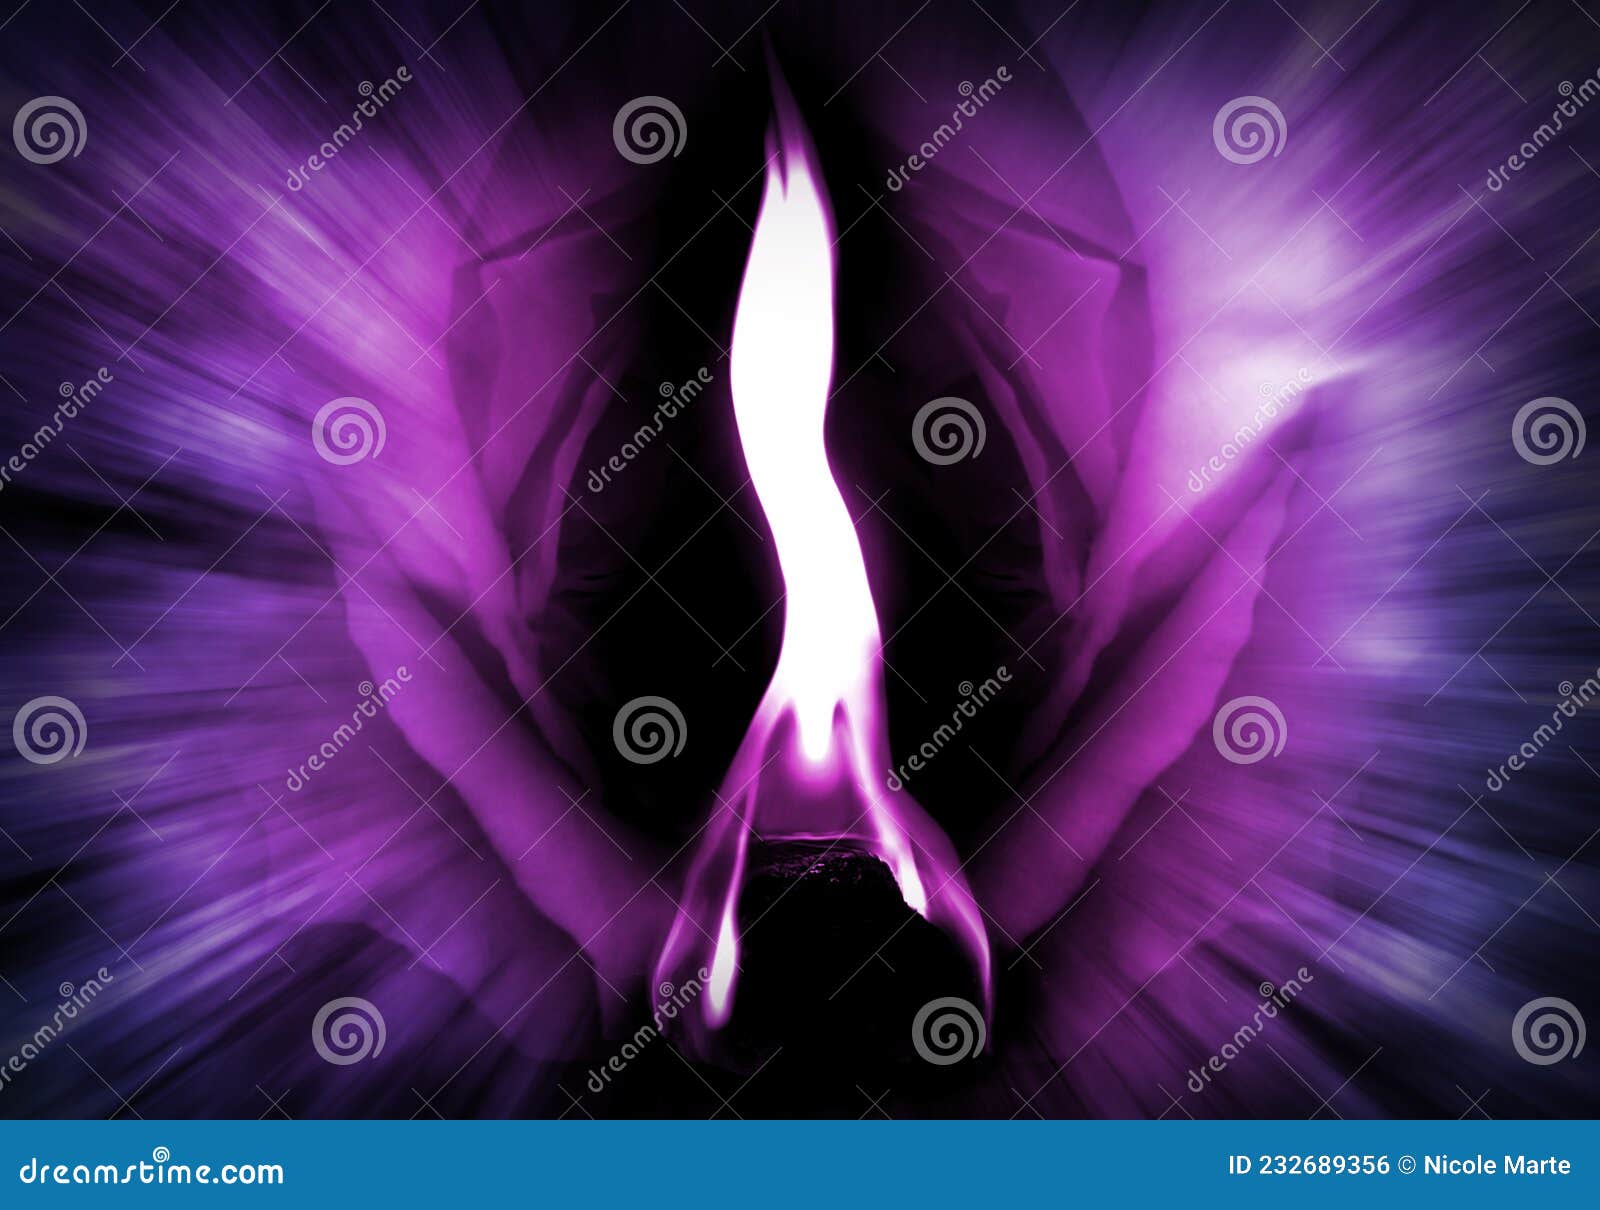 the violet flame of saint germain - divine energy - transformation